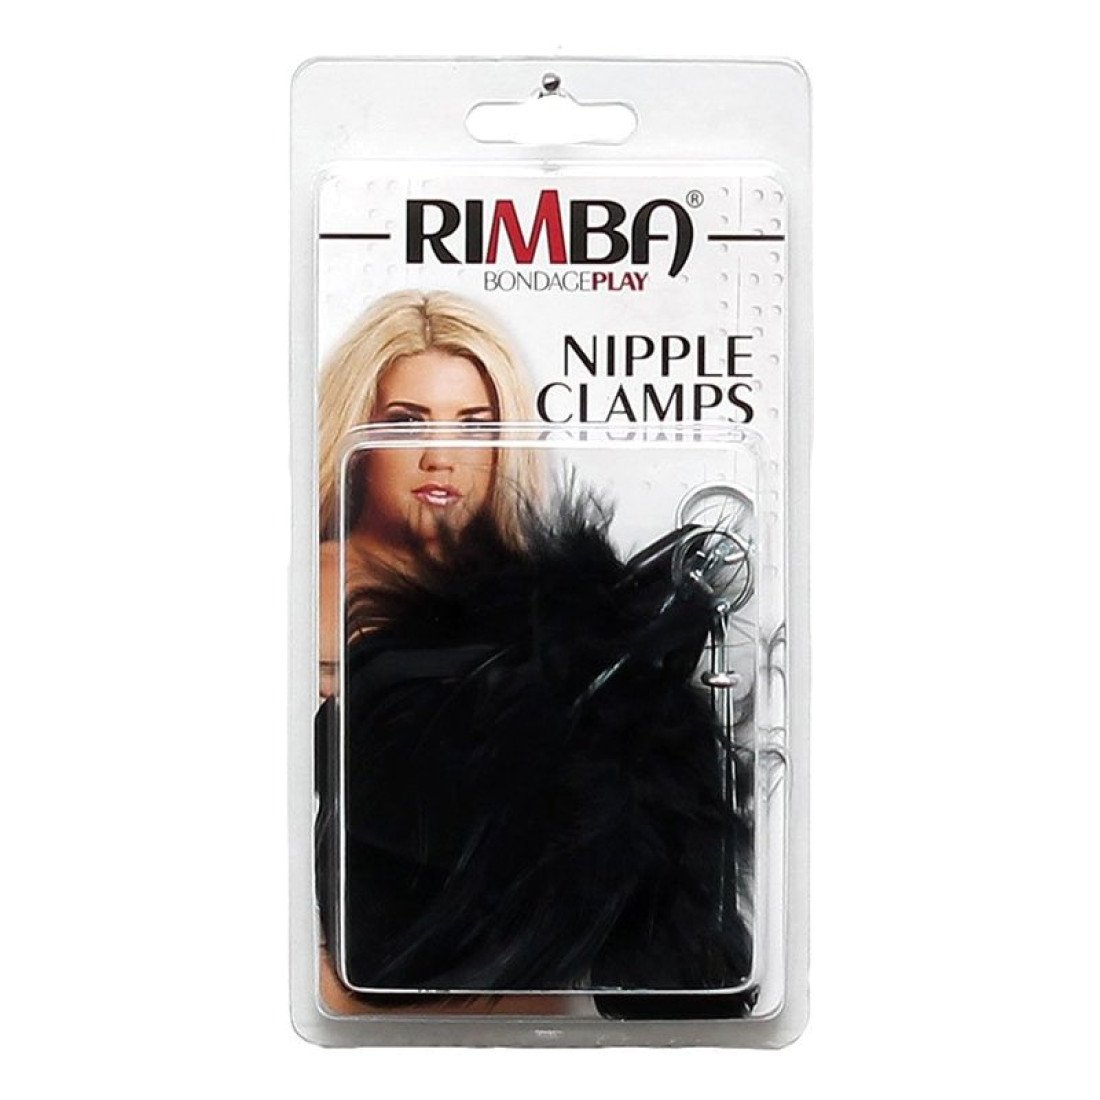 Spenelių spaustukai „Nipple Clamps with Feathers“ - Rimba